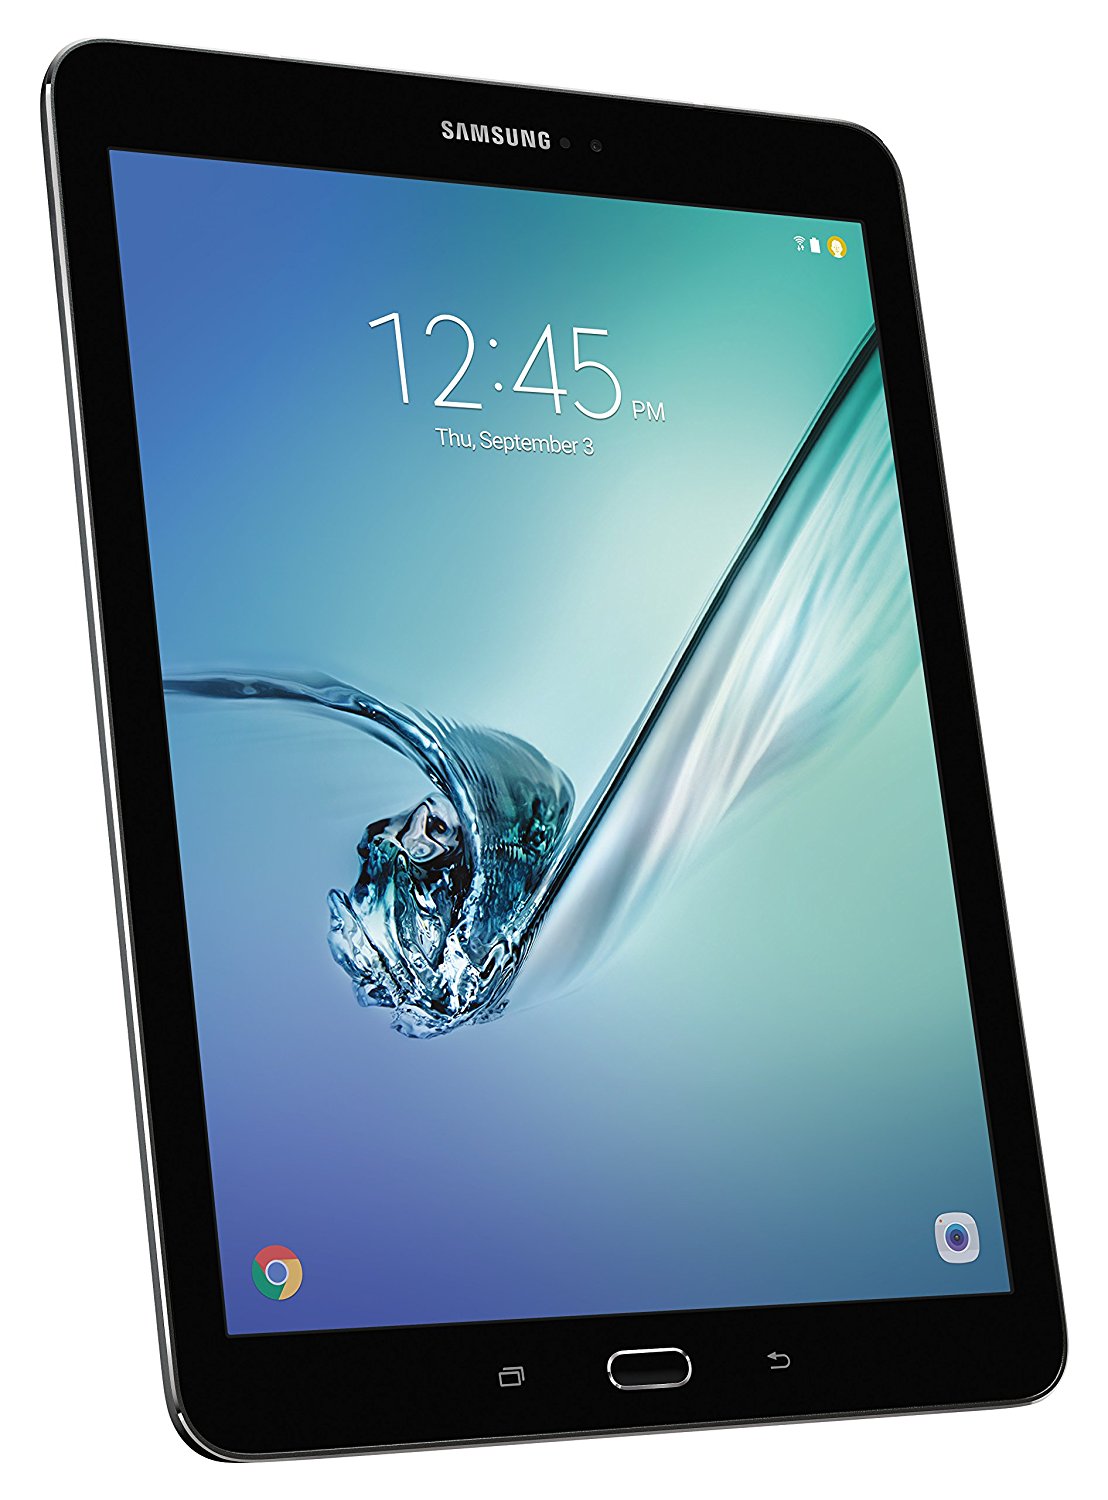 Samsung Galaxy Tab S2 9 7 32 GB Wifi Tablet (Black)SM-T813NZKEDBT